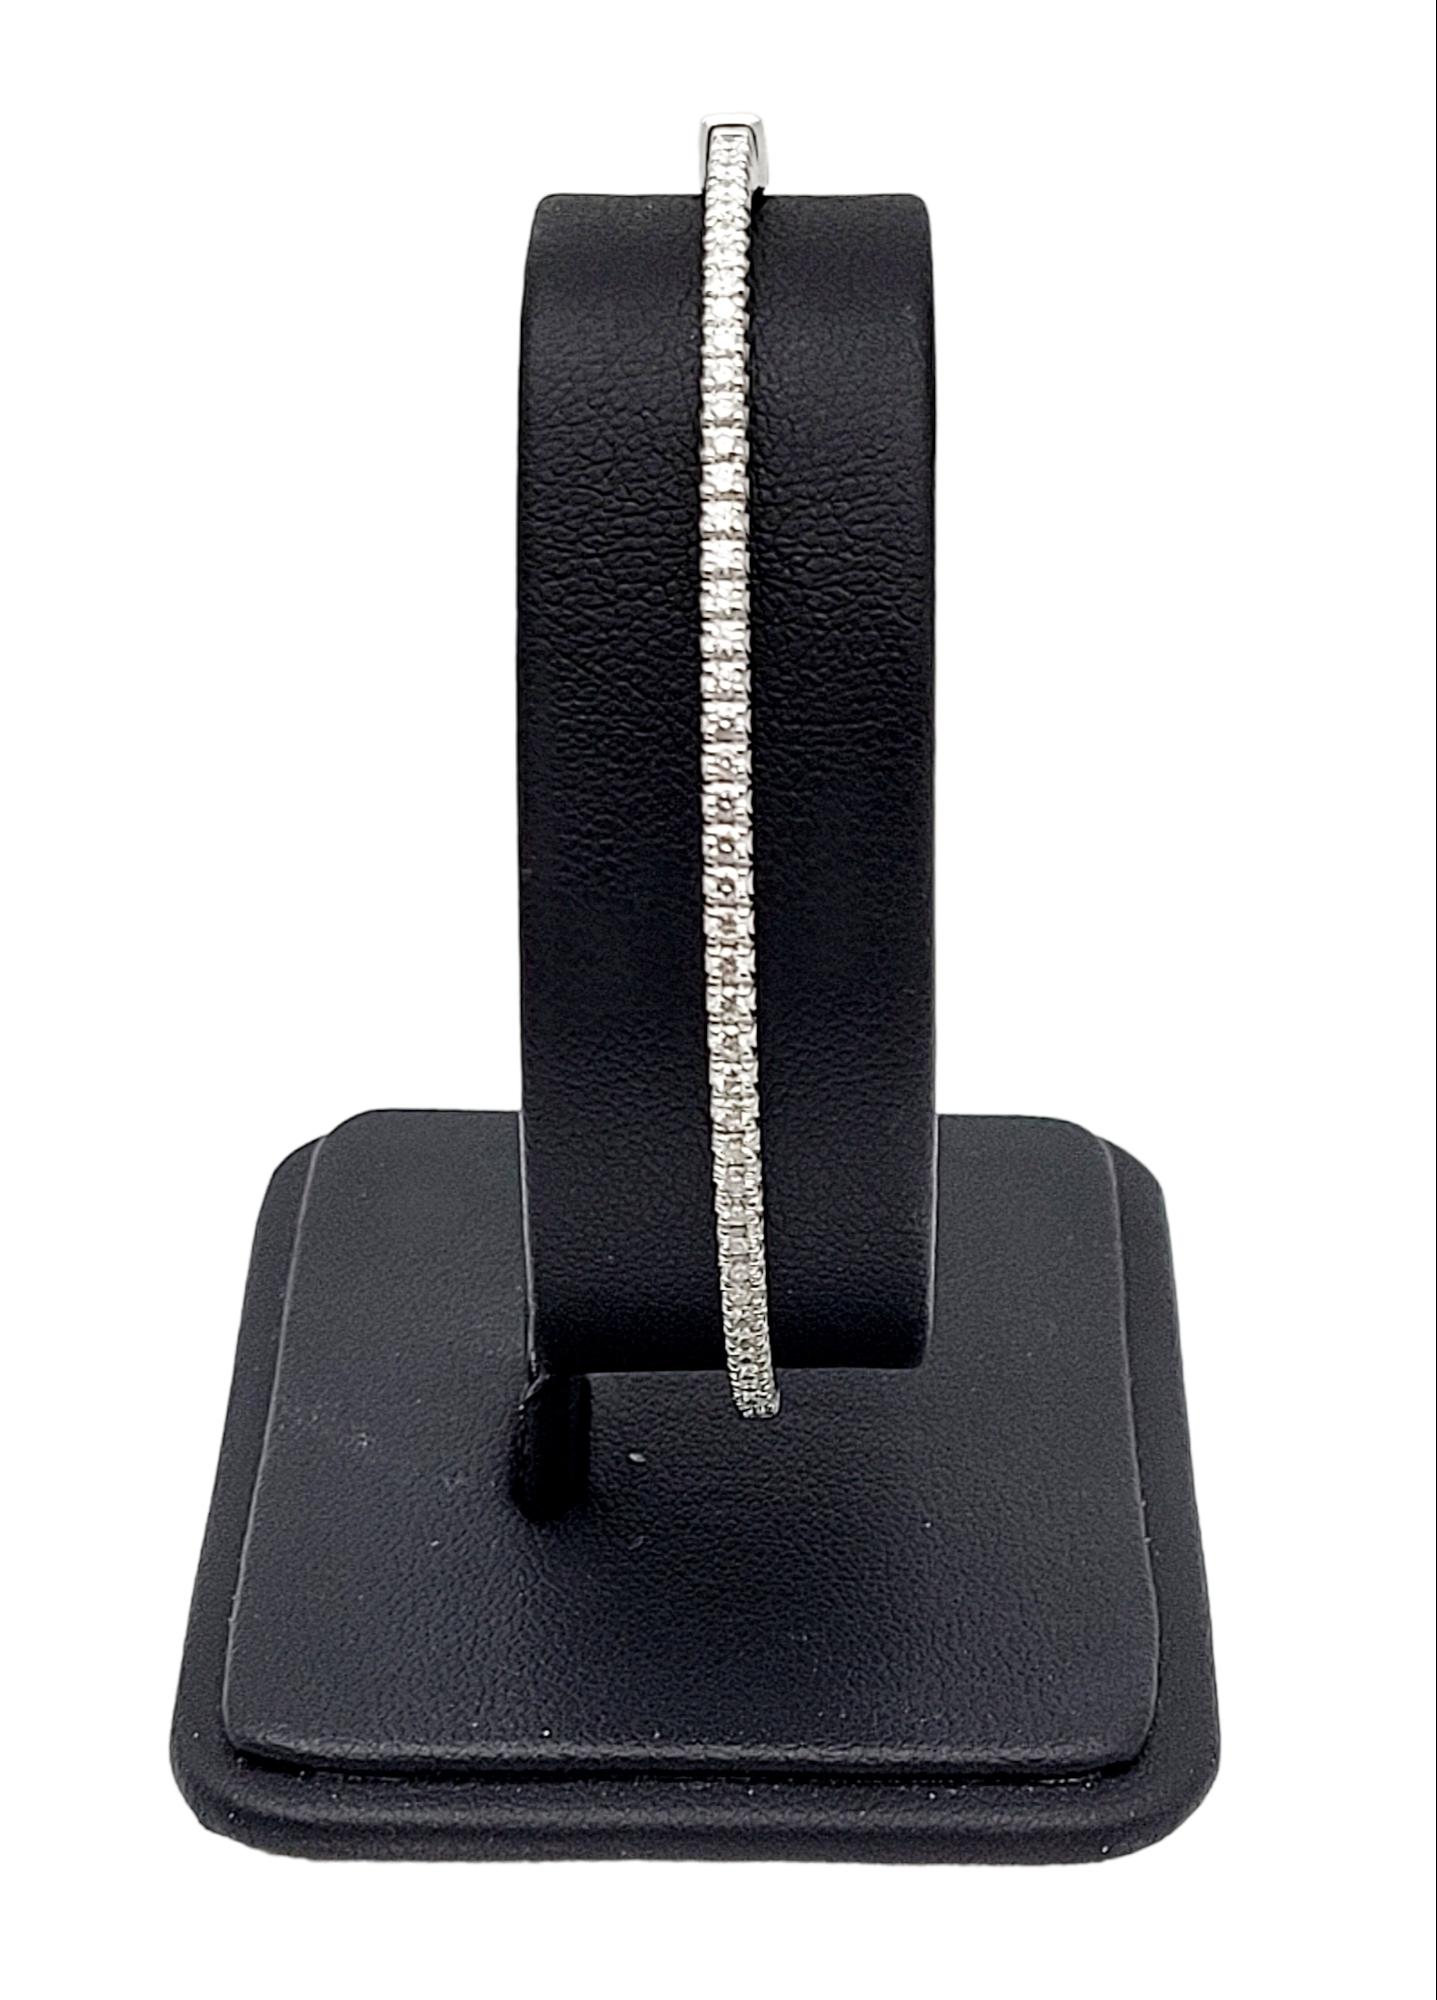 Tiffany & Co. Metro Hinged Bangle Bracelet in 18 Karat White Gold Size Medium For Sale 1